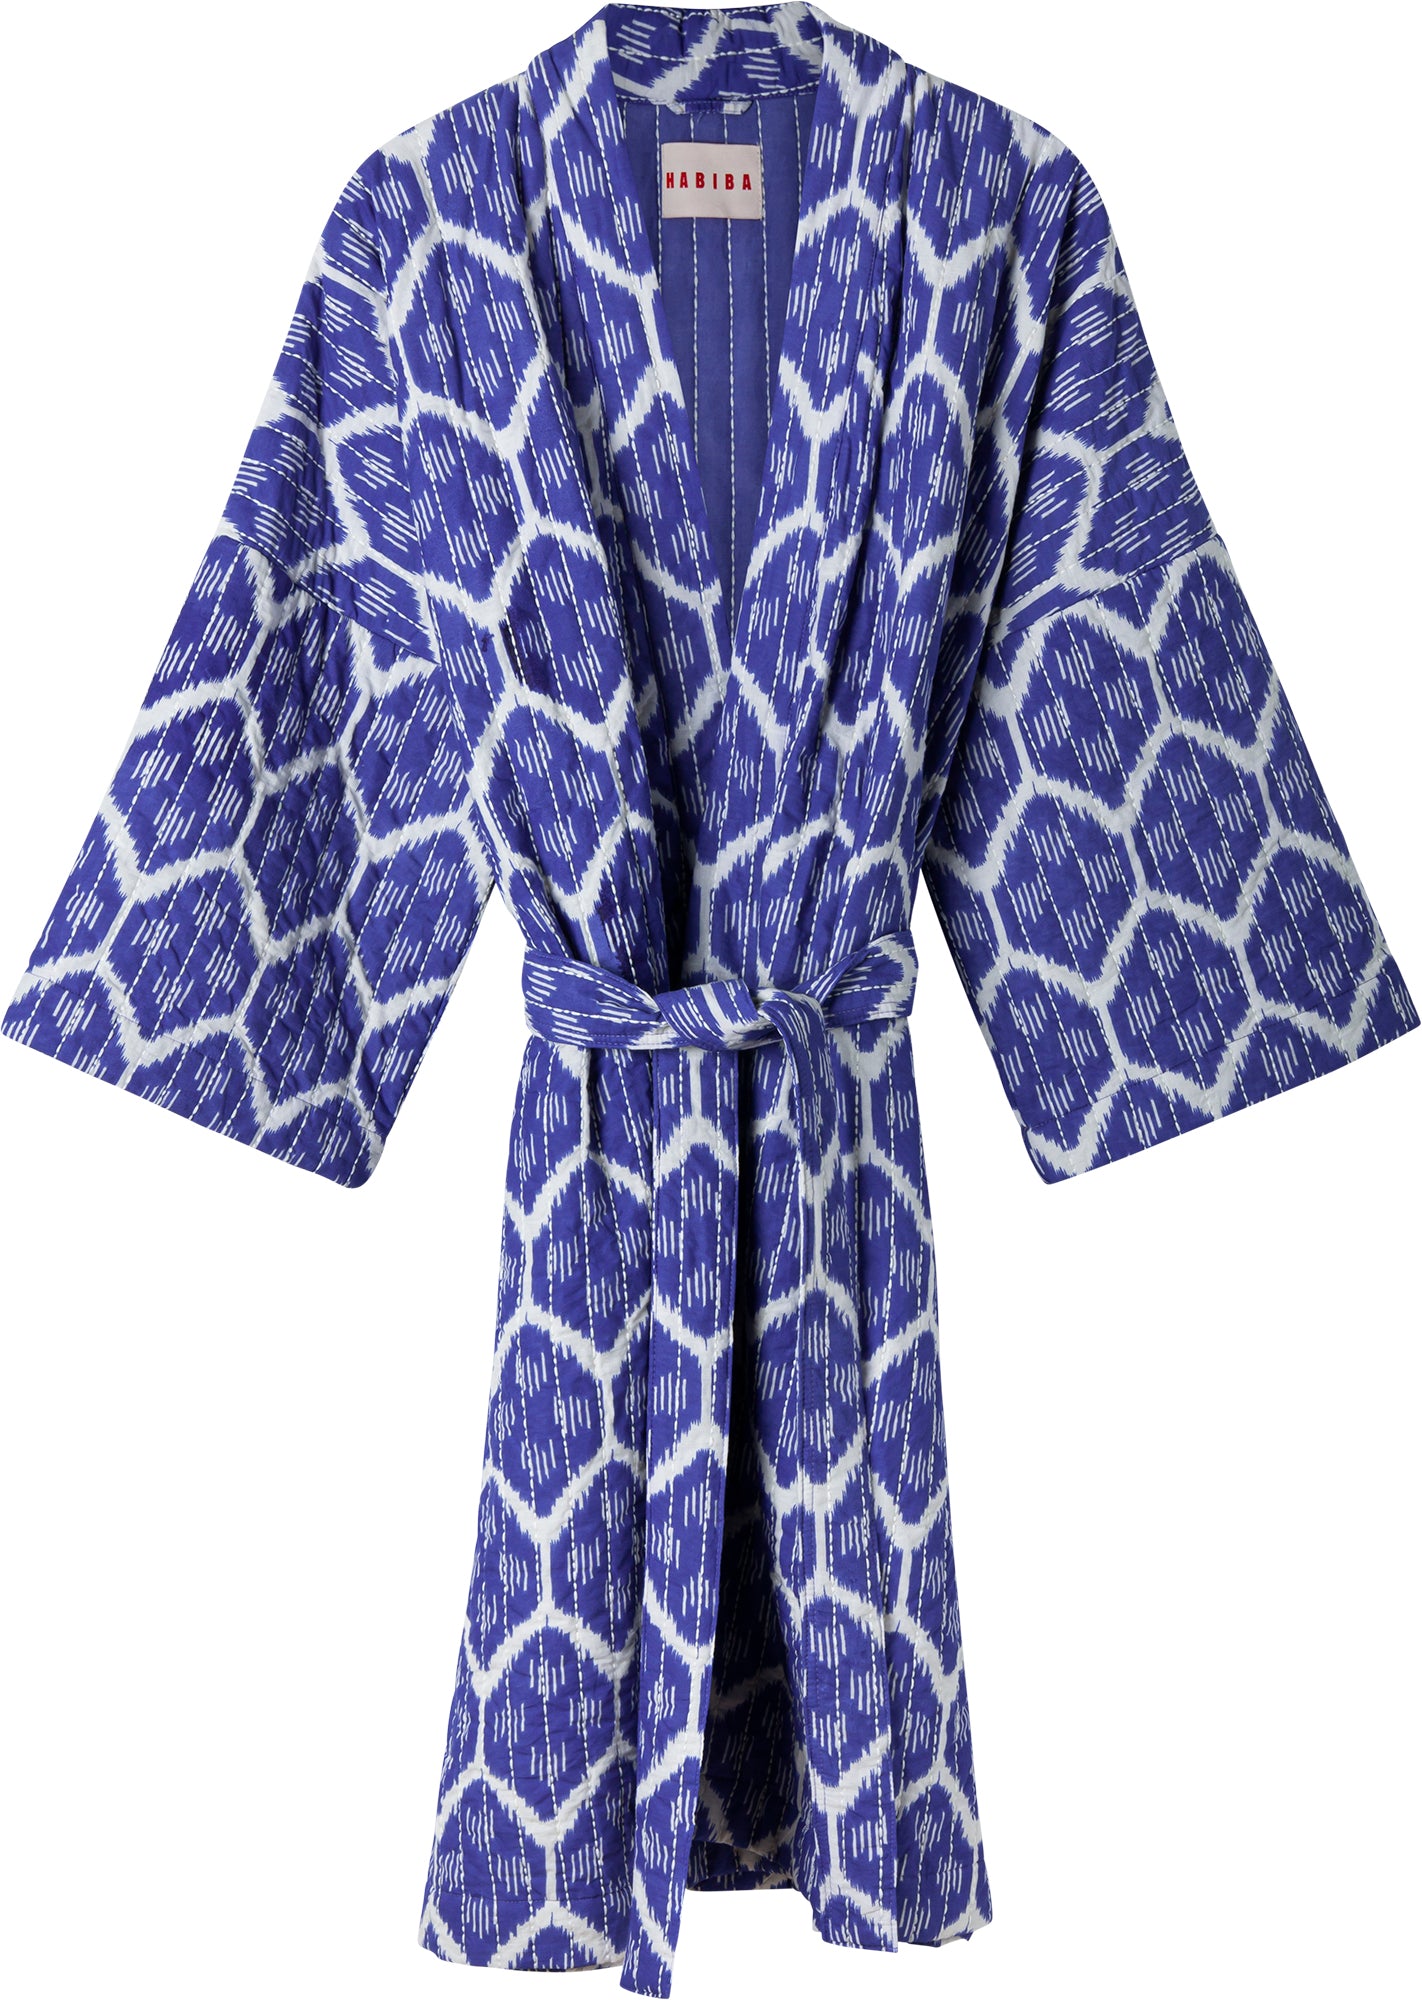 ikat quilted kimono habiba